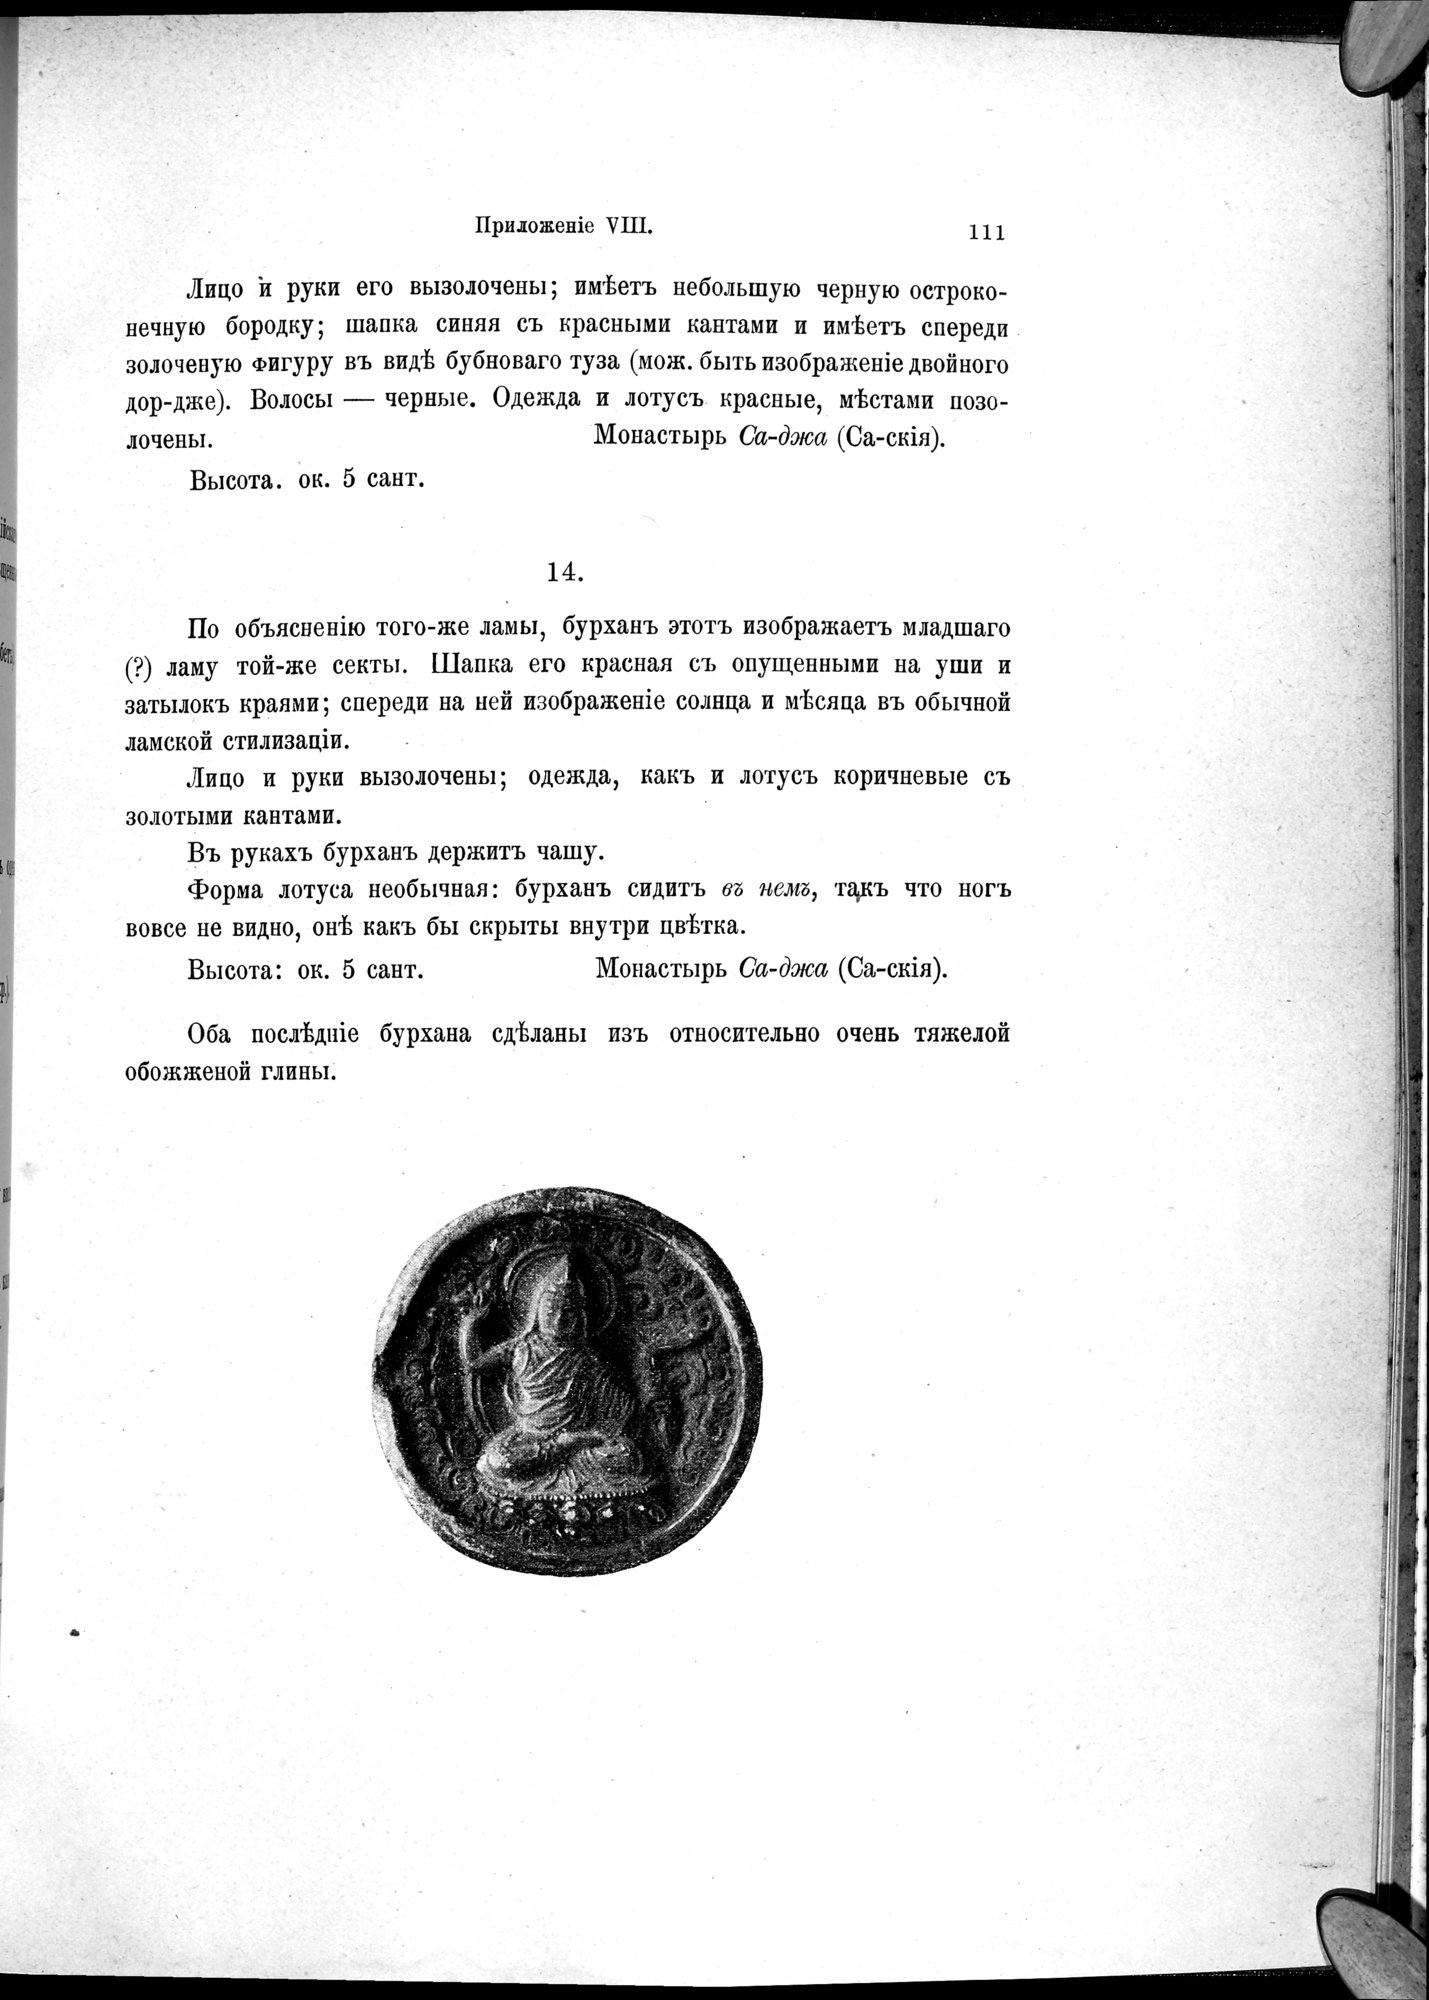 Mongoliia i Kam : vol.3 / Page 141 (Grayscale High Resolution Image)